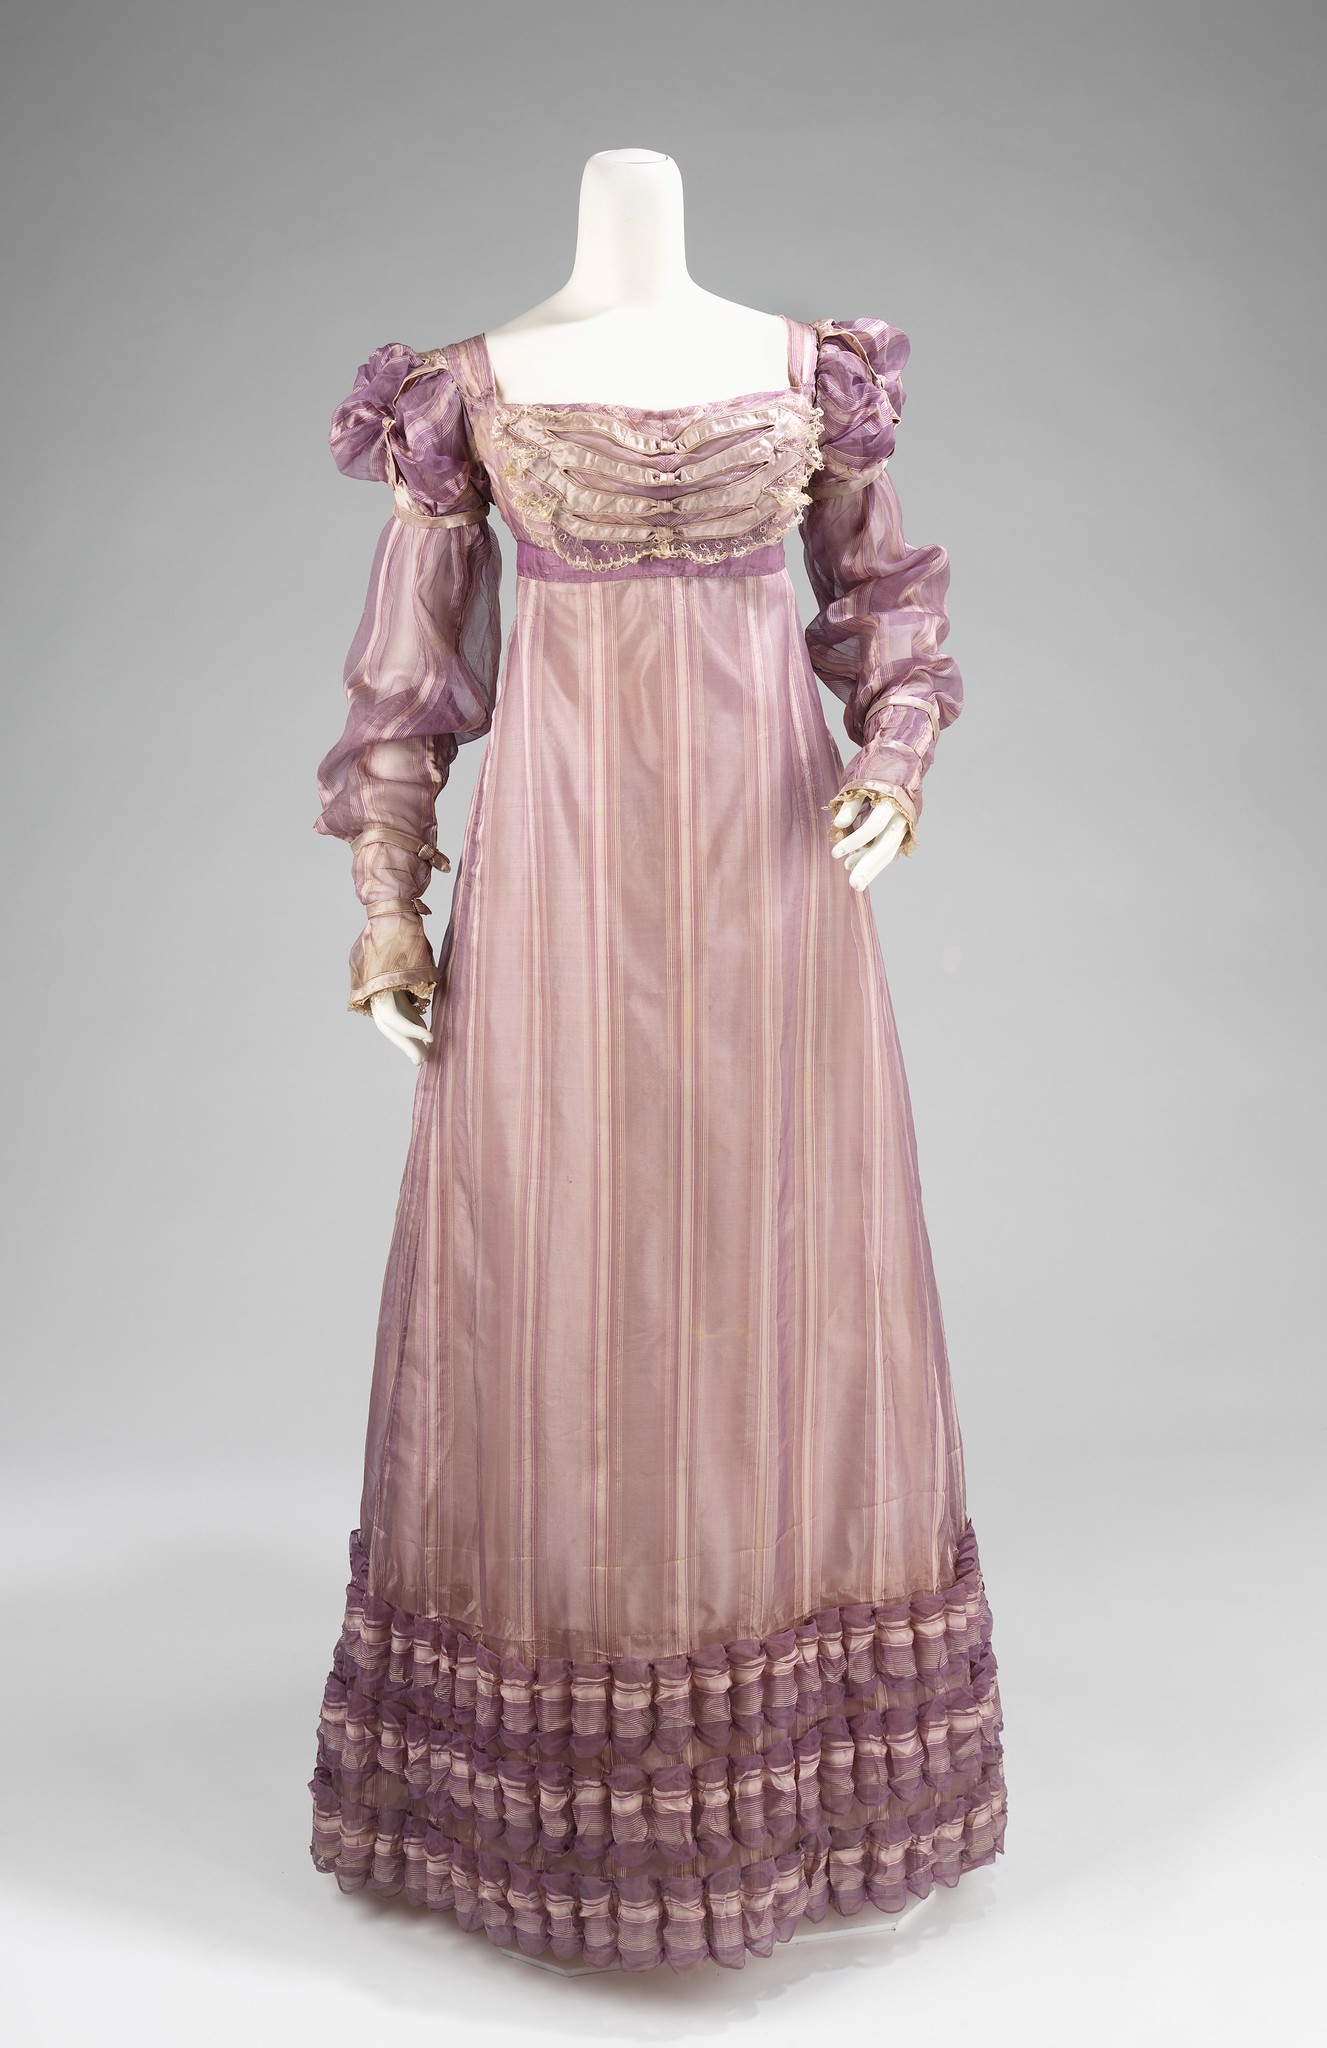 1820 Ball gown. American. Silk. metmuseum